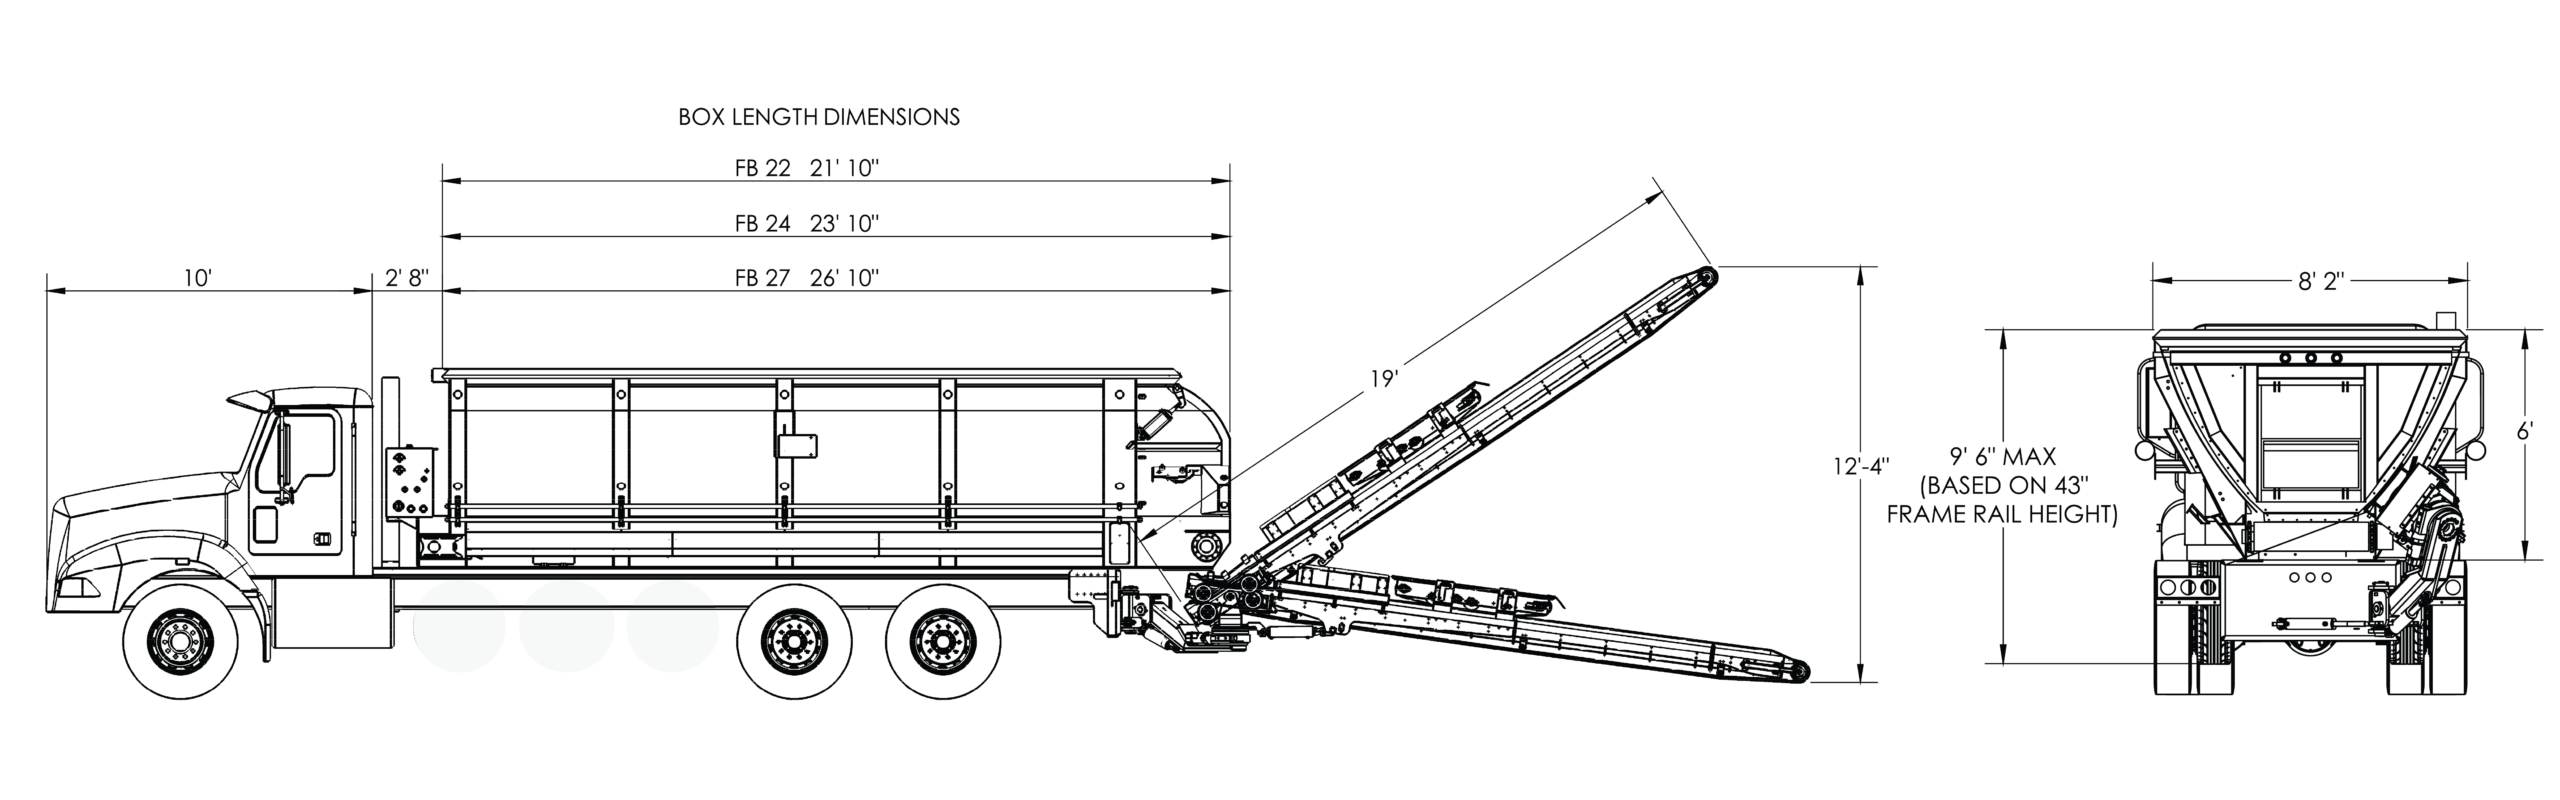 FatBoy | Slinger Truck | Conveyor Application Systems - CAS - Conveyor Application Systems  